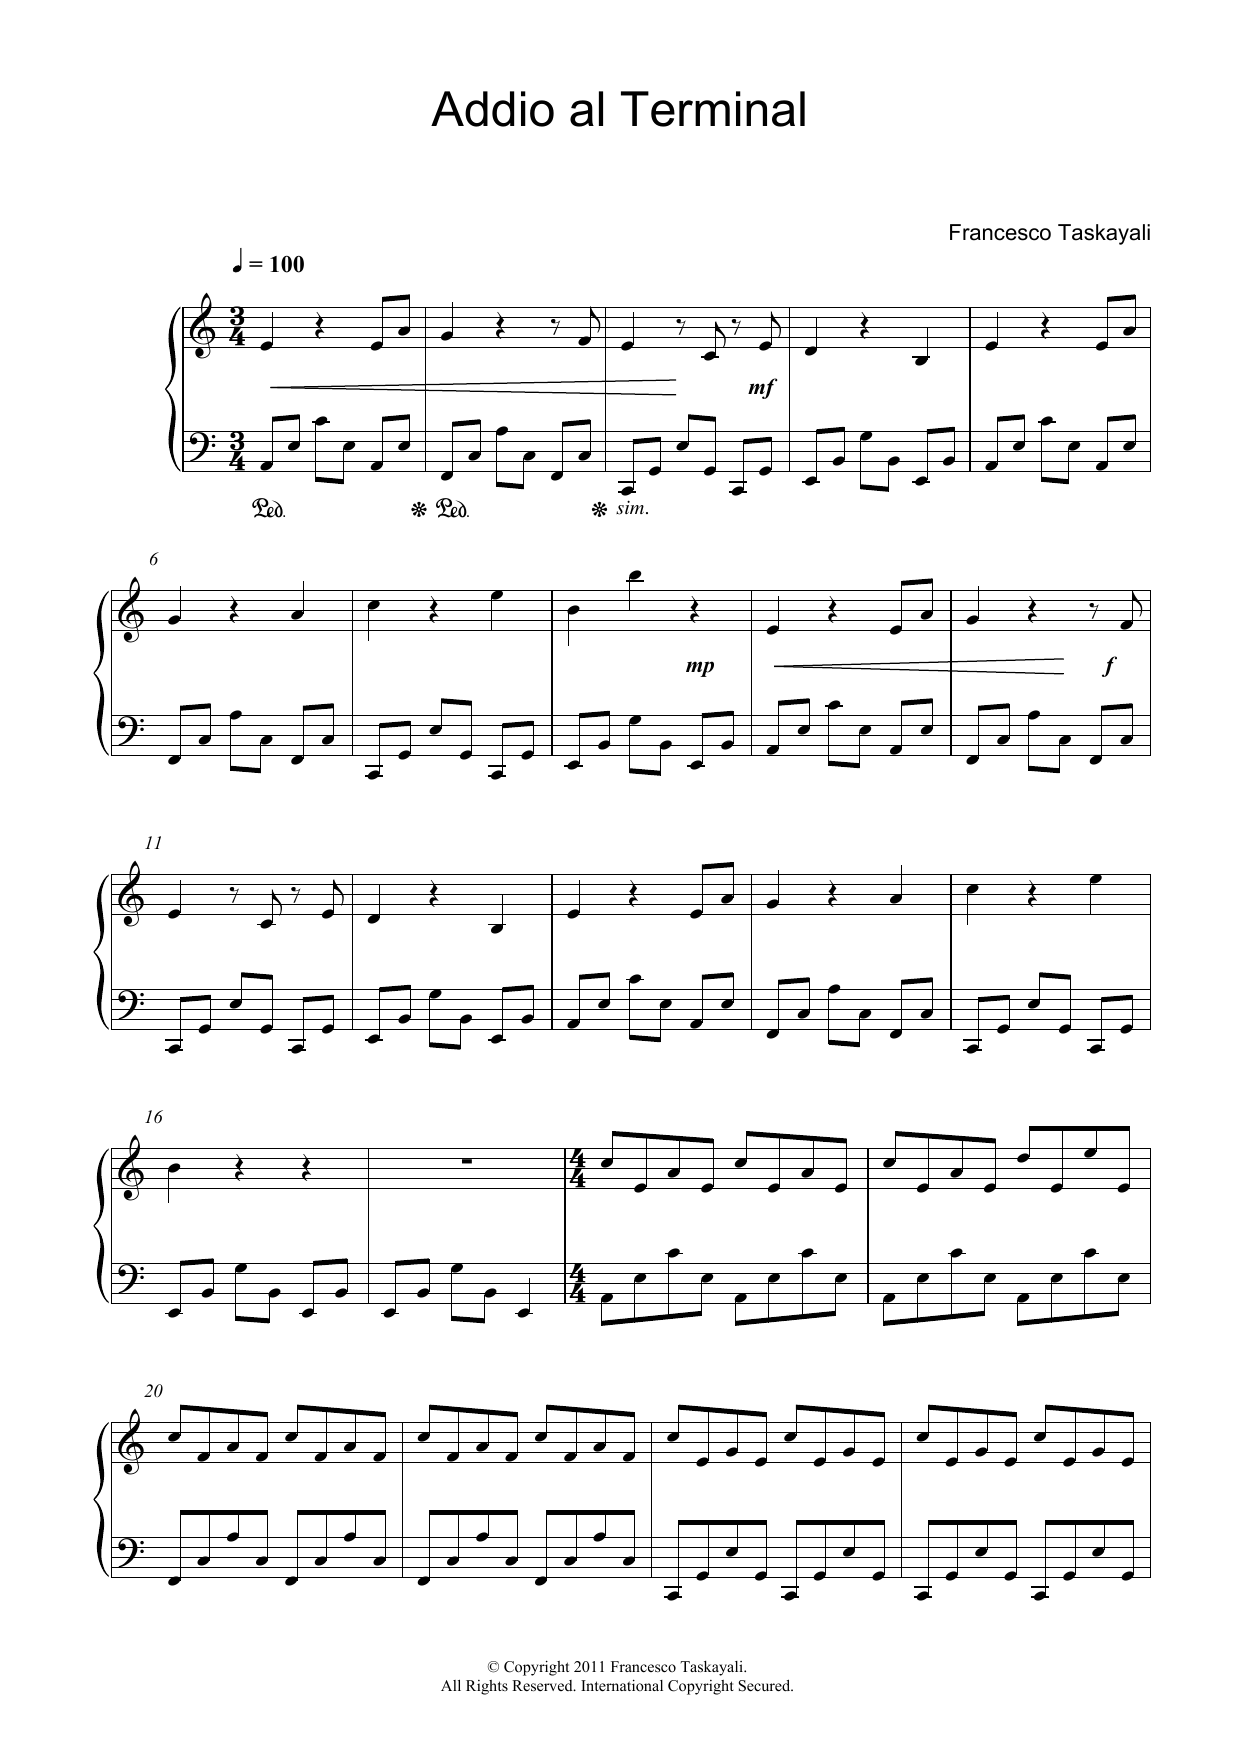 Francesco Taskayali Addio Al Terminal Sheet Music Notes & Chords for Piano - Download or Print PDF